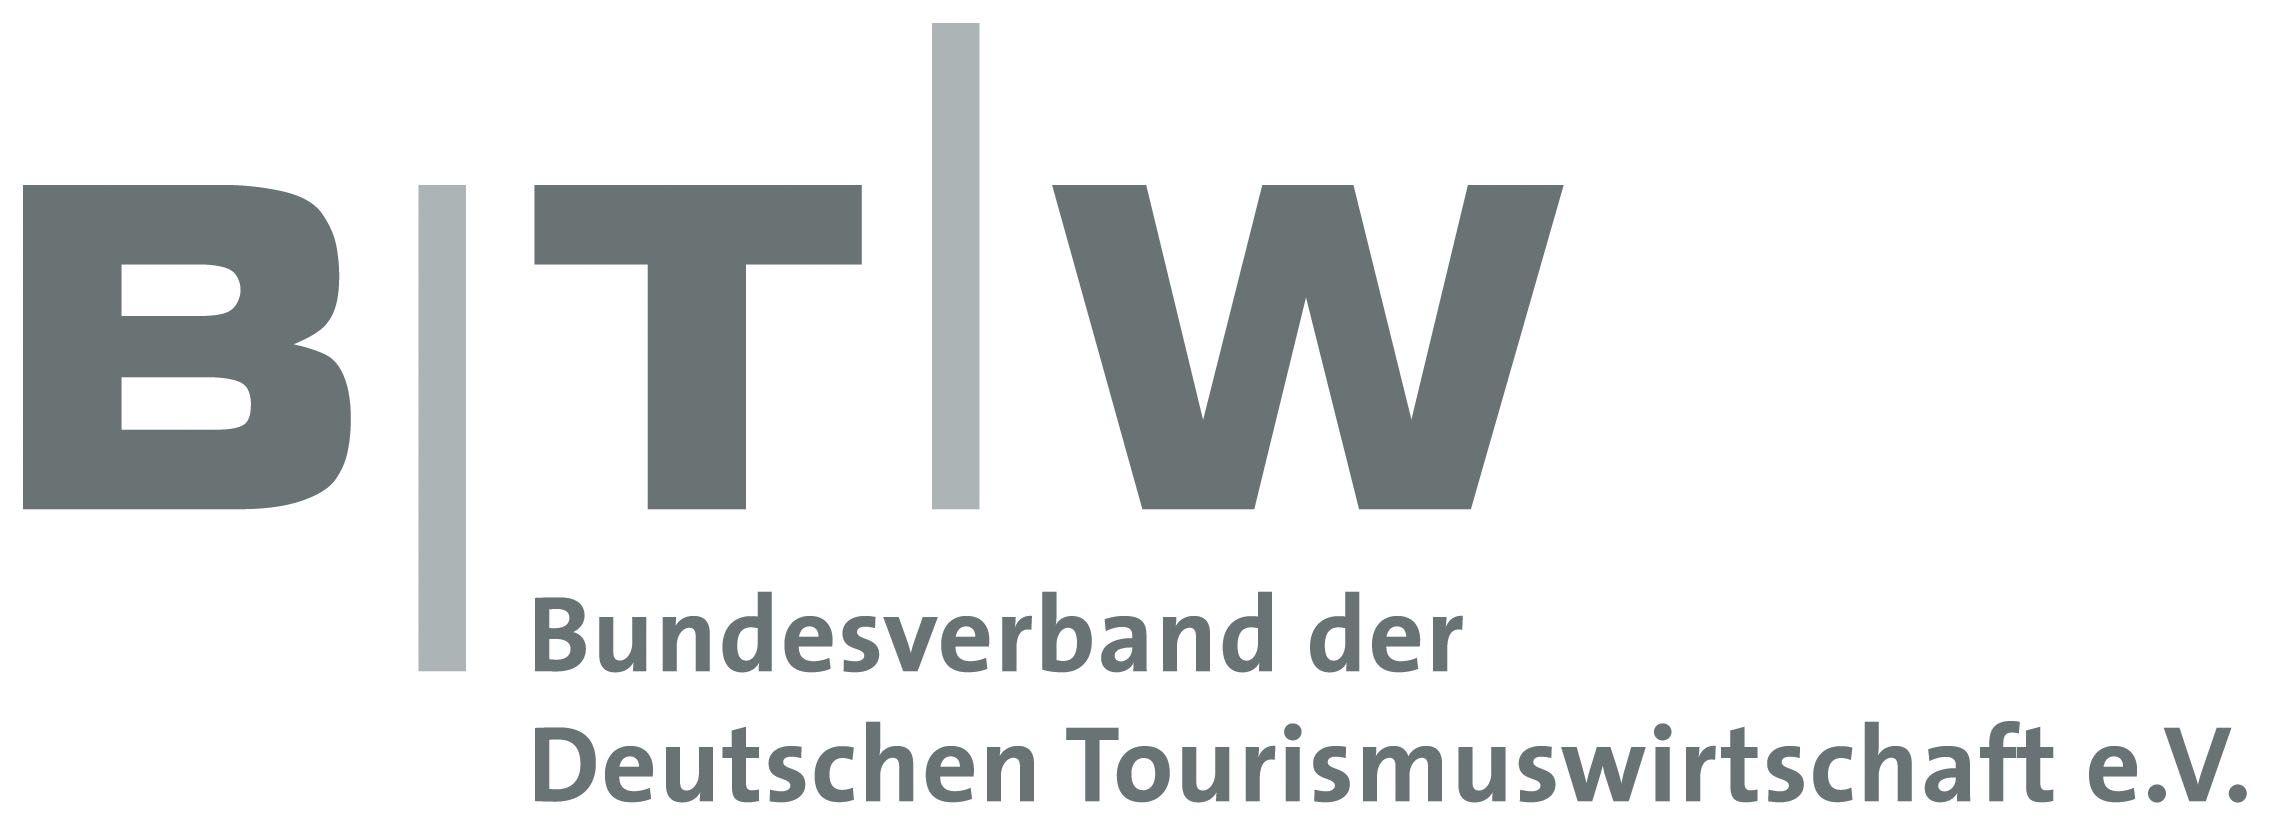 BTW Logo - File:BTW-Logo.jpg - Wikimedia Commons